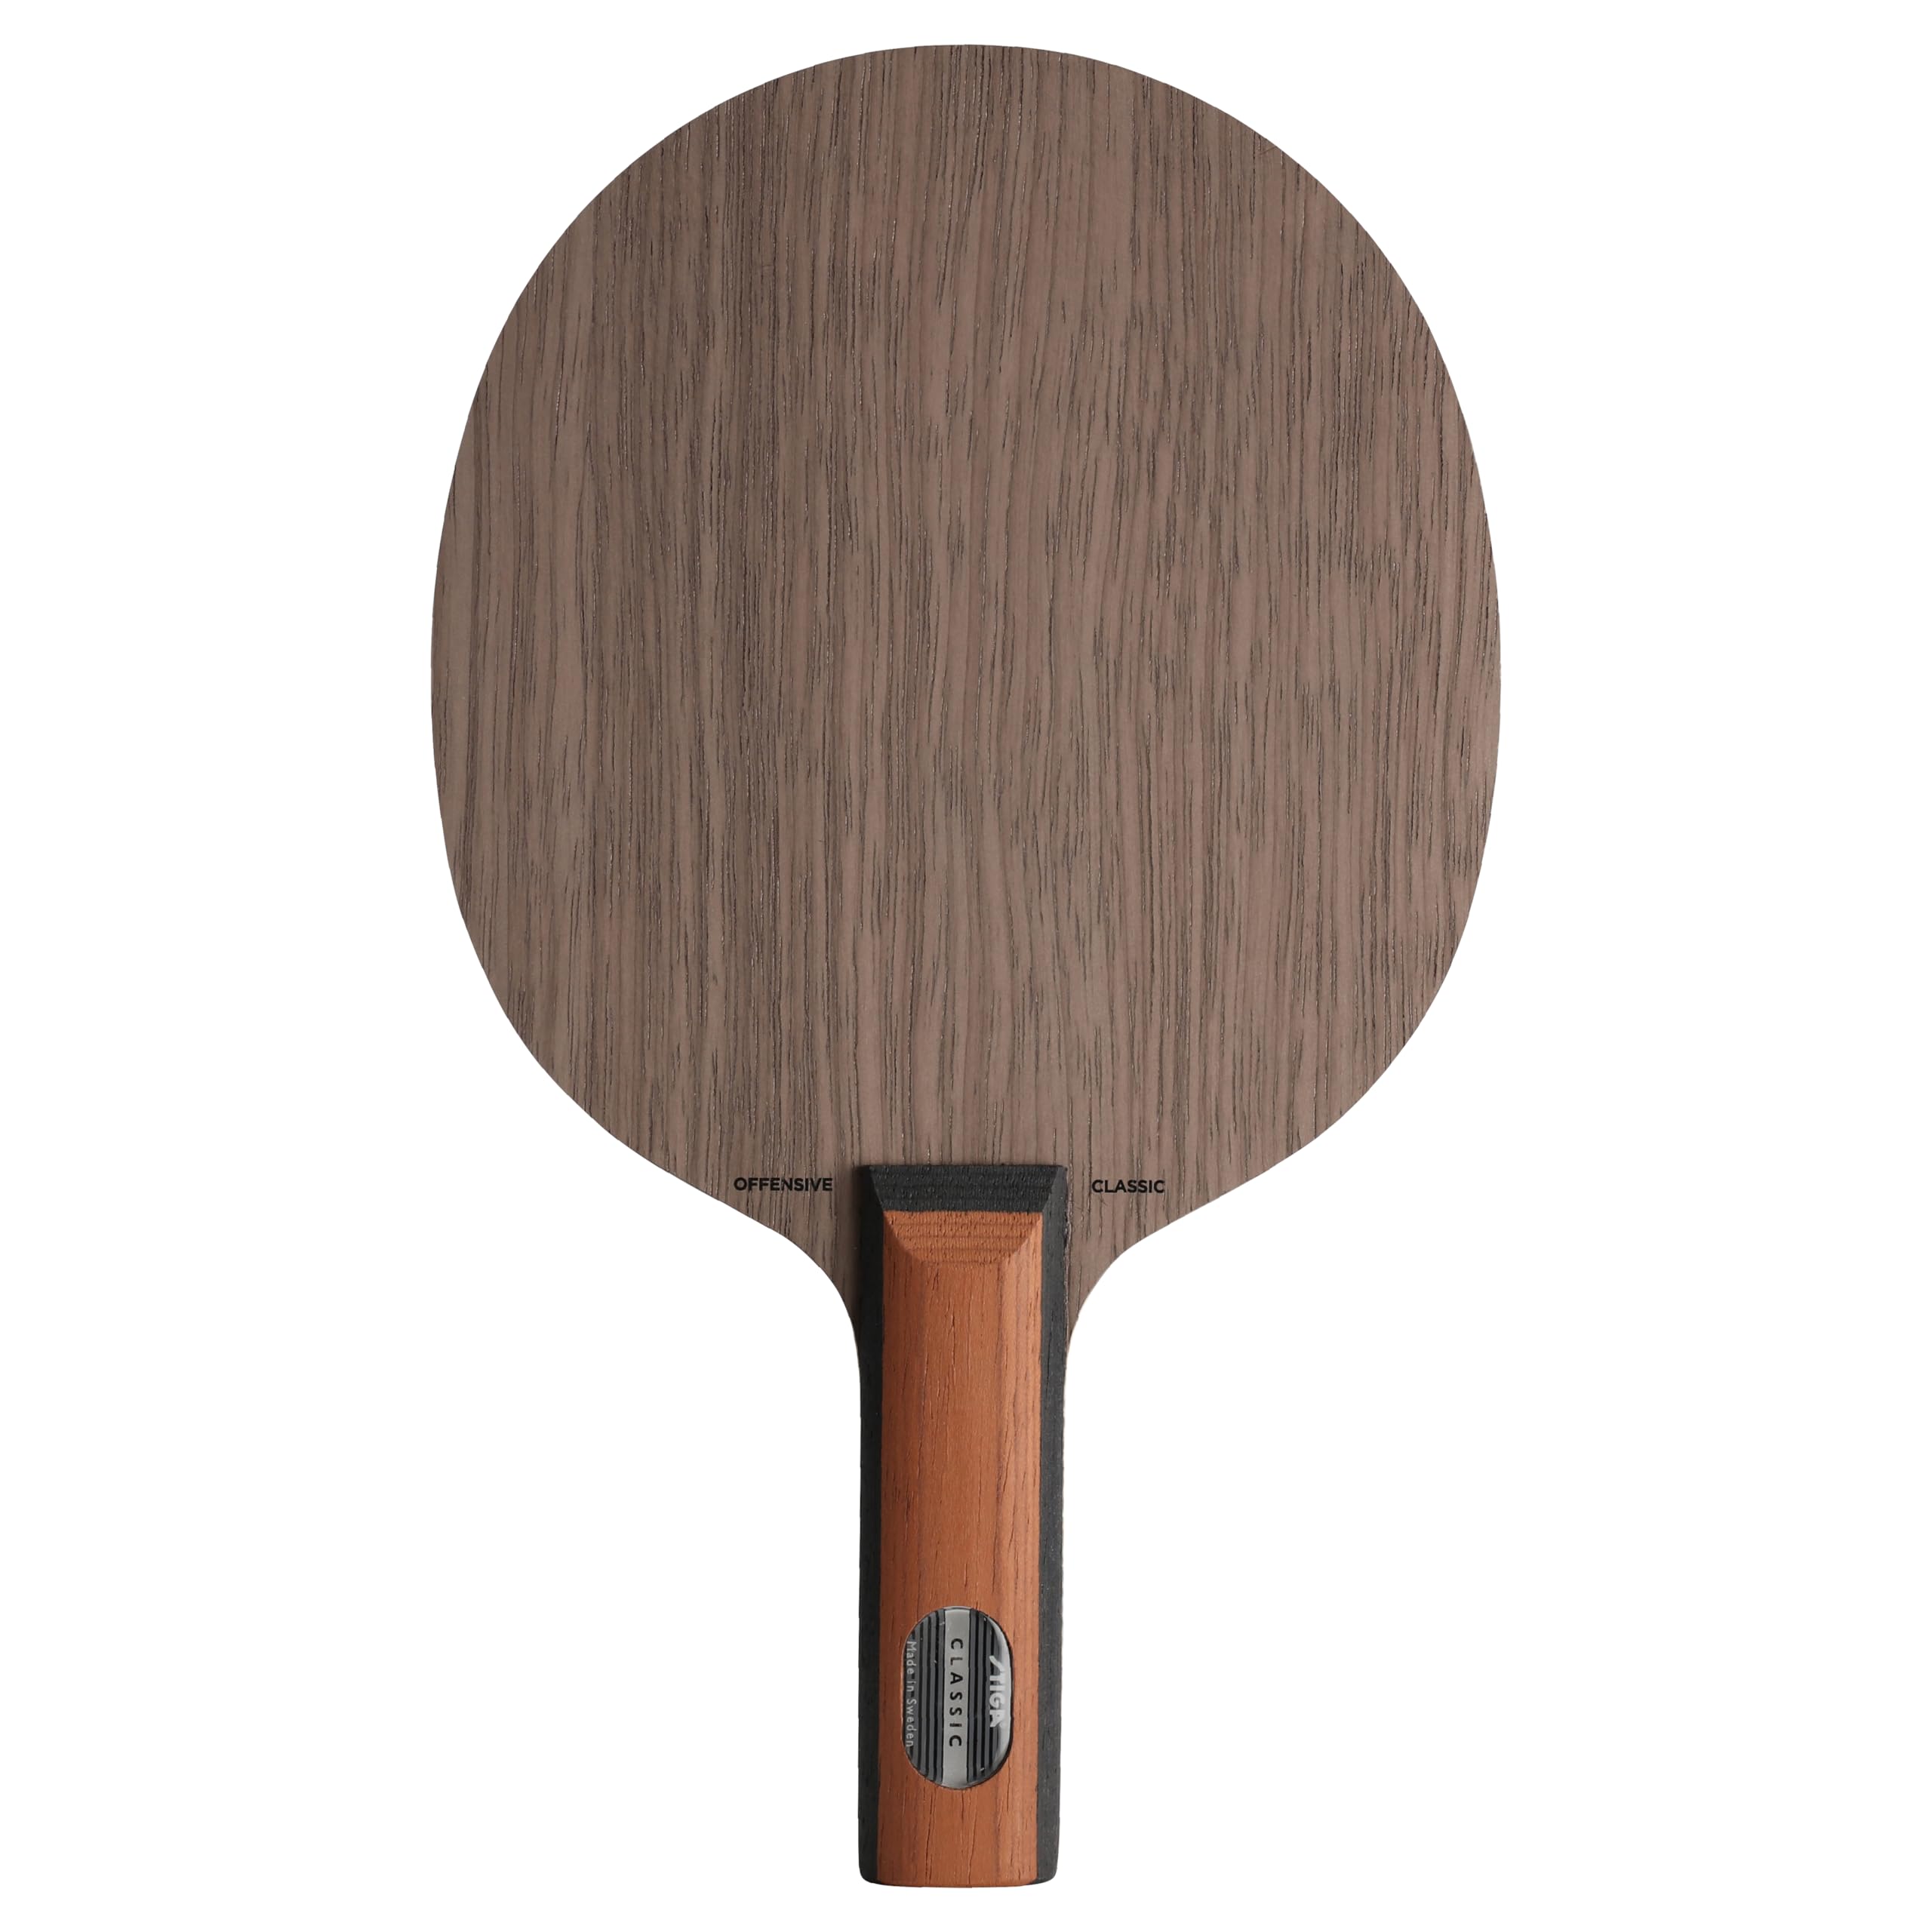 STIGA Unisex – Erwachsene Offensive Classic Table Tennis Blade, Wood, Gerade